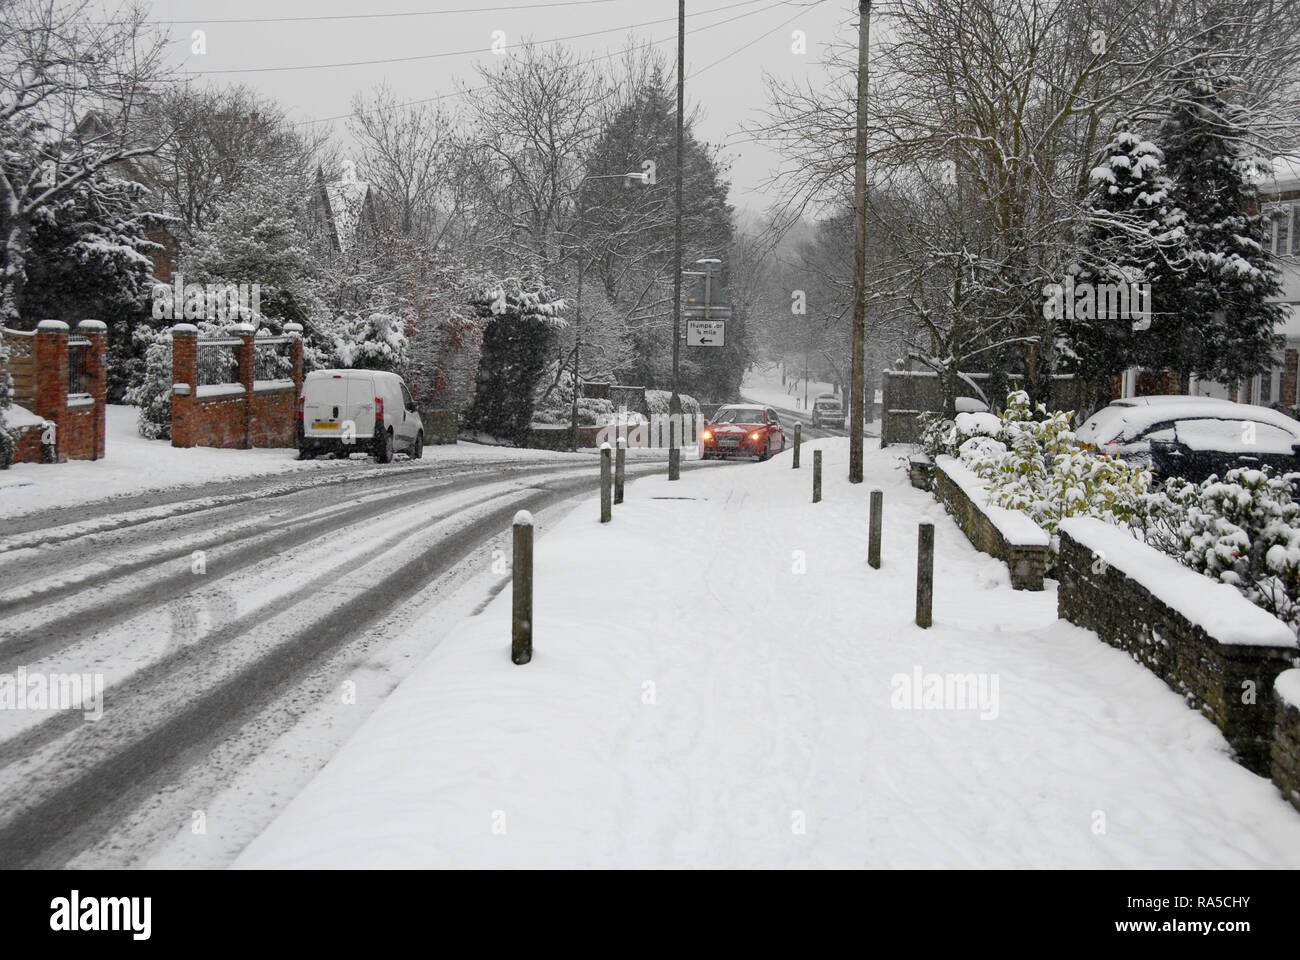 Car negotiating a slight incline during falling snow, England Stock Photo